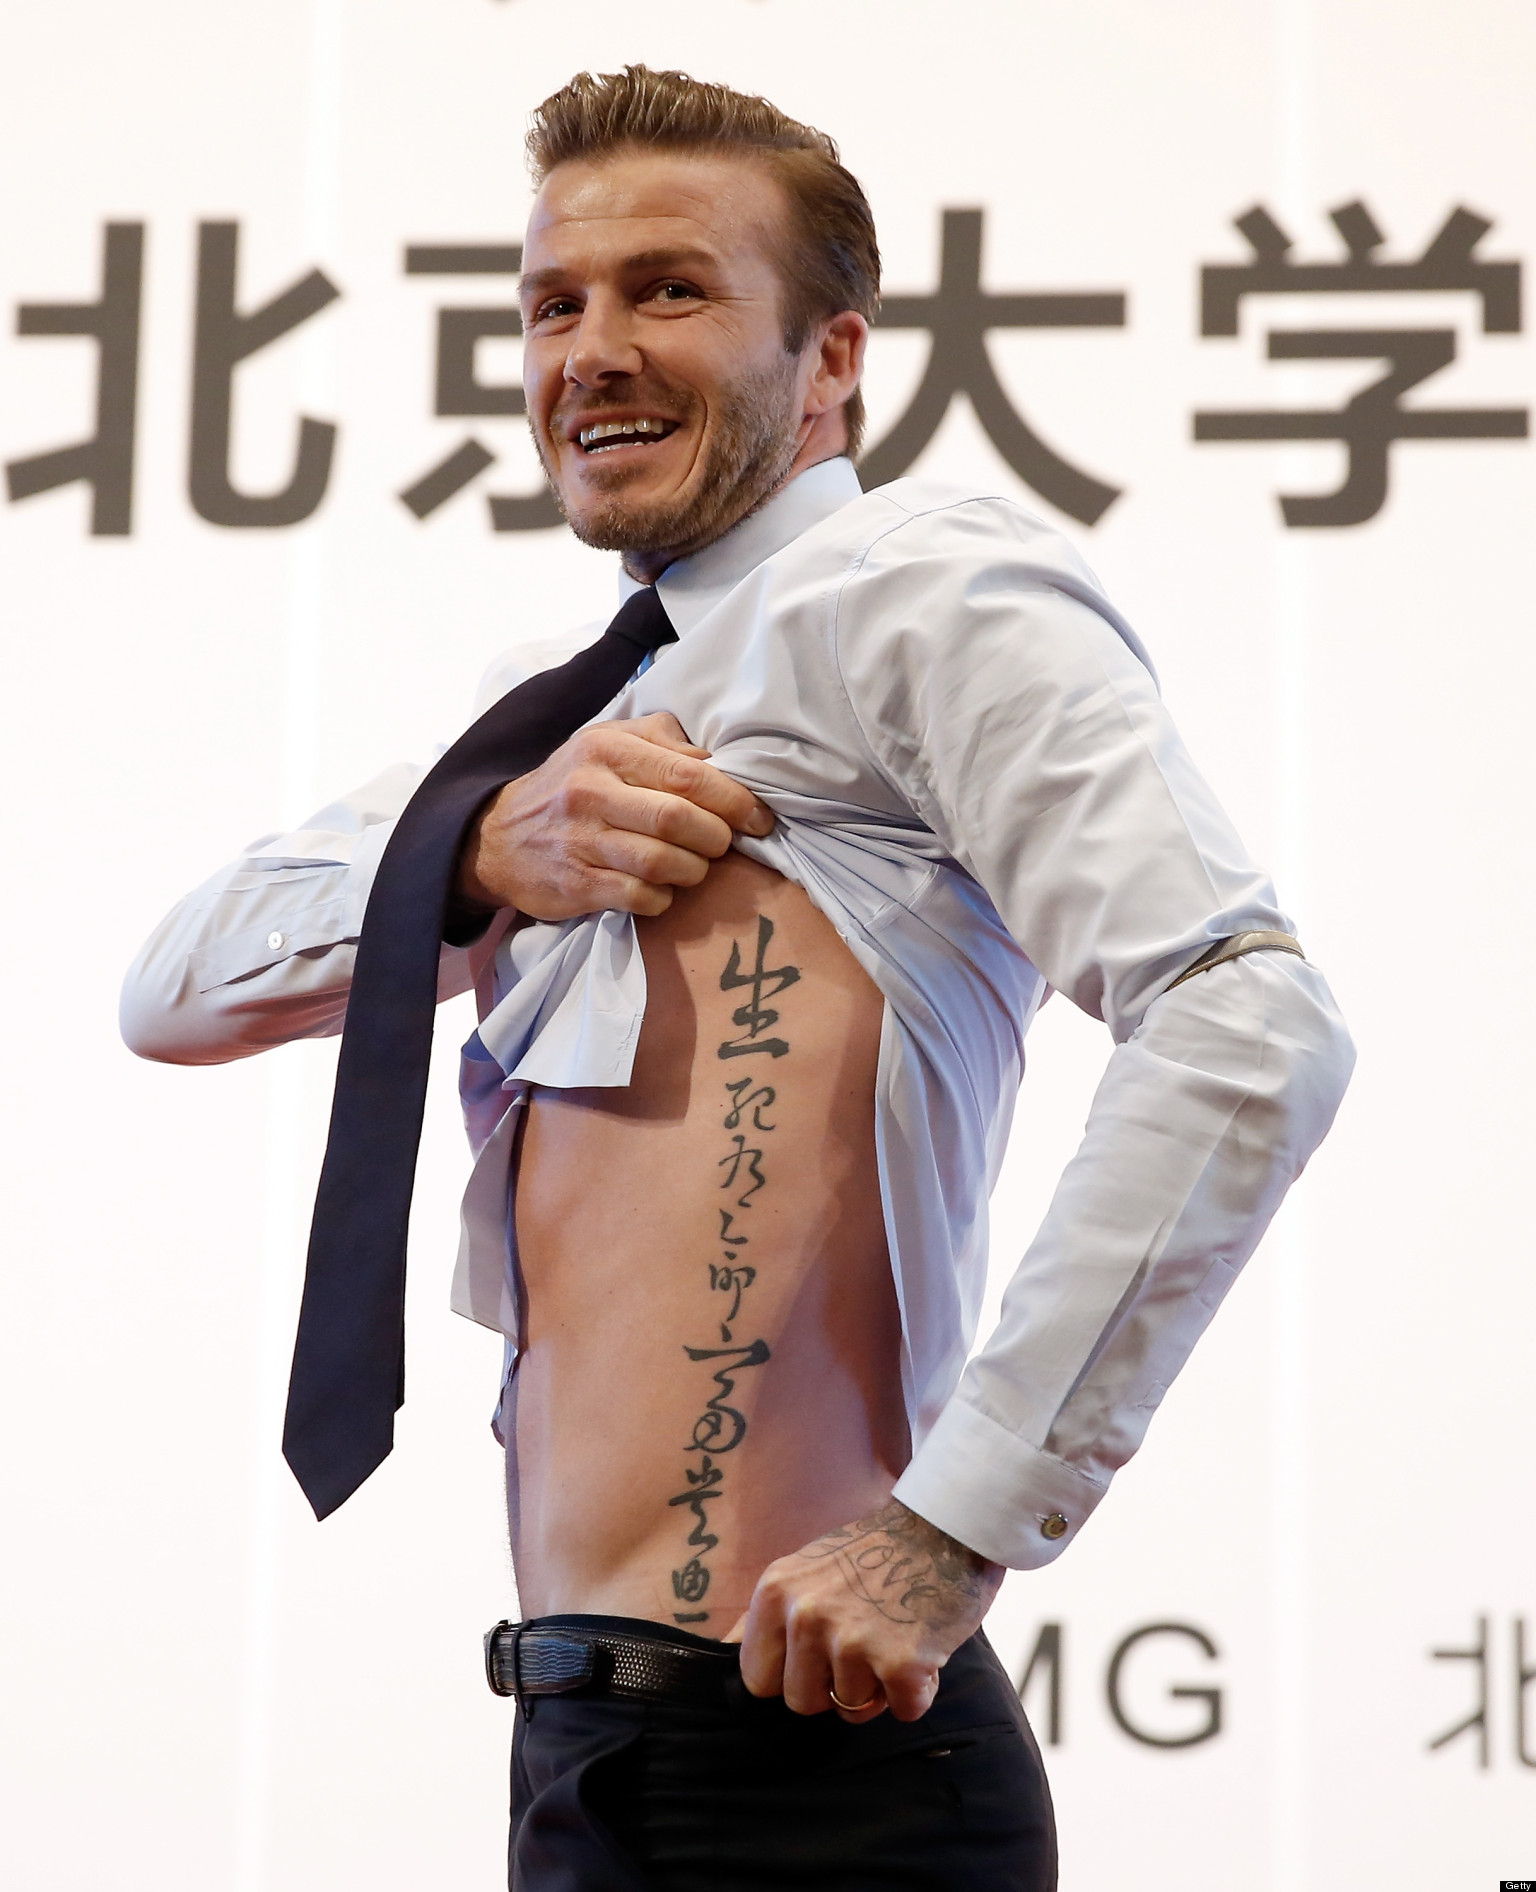 Hebrew name tattoo design, ribs side tattoo idea for man, here David Beckham